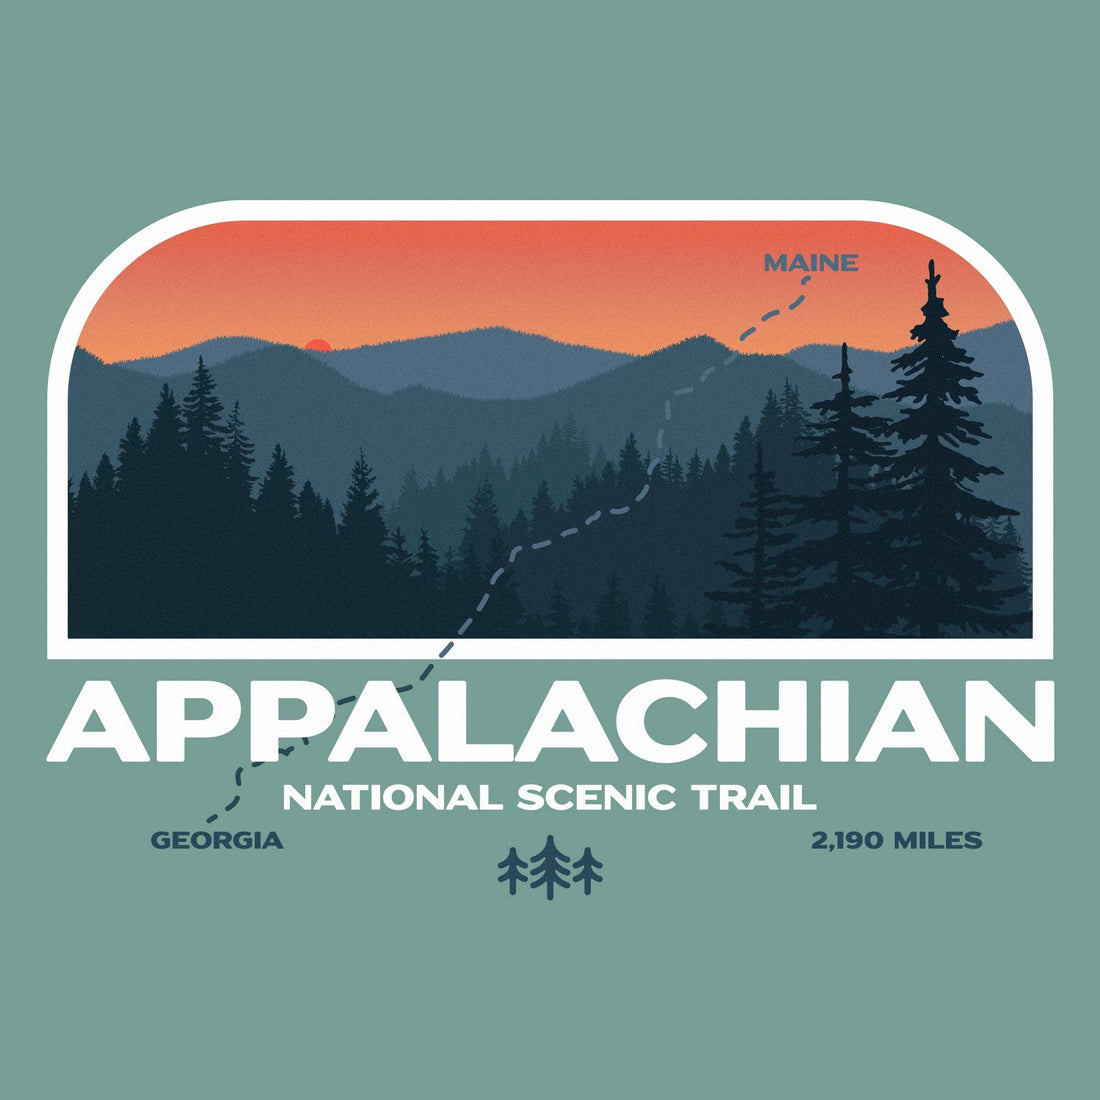 TriPine Appalachian Trail Long Sleeve Shirt